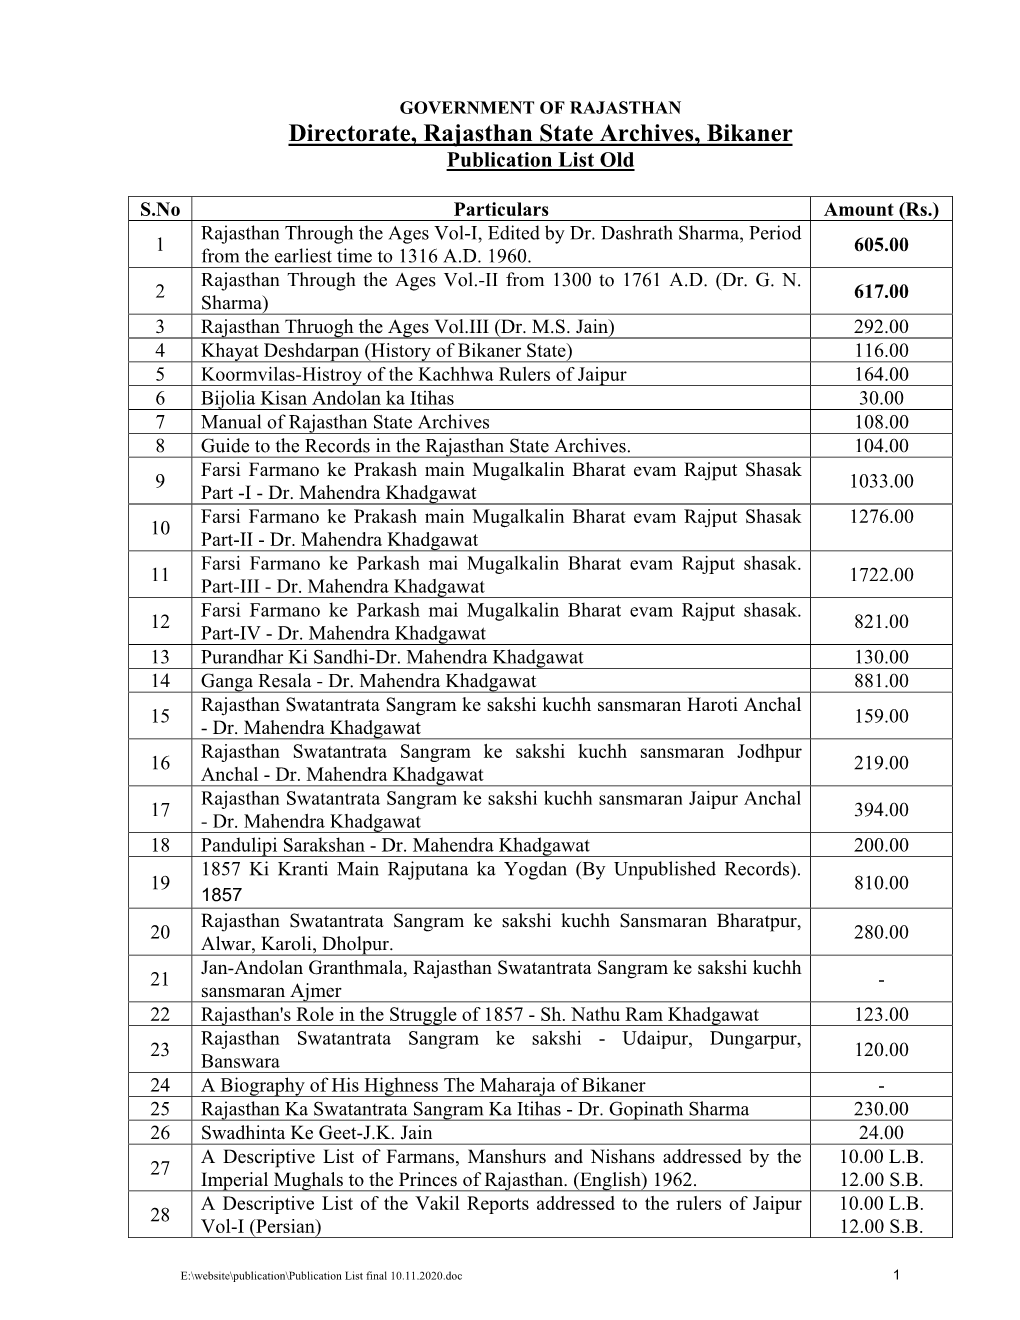 Directorate, Rajasthan State Archives, Bikaner Publication List Old